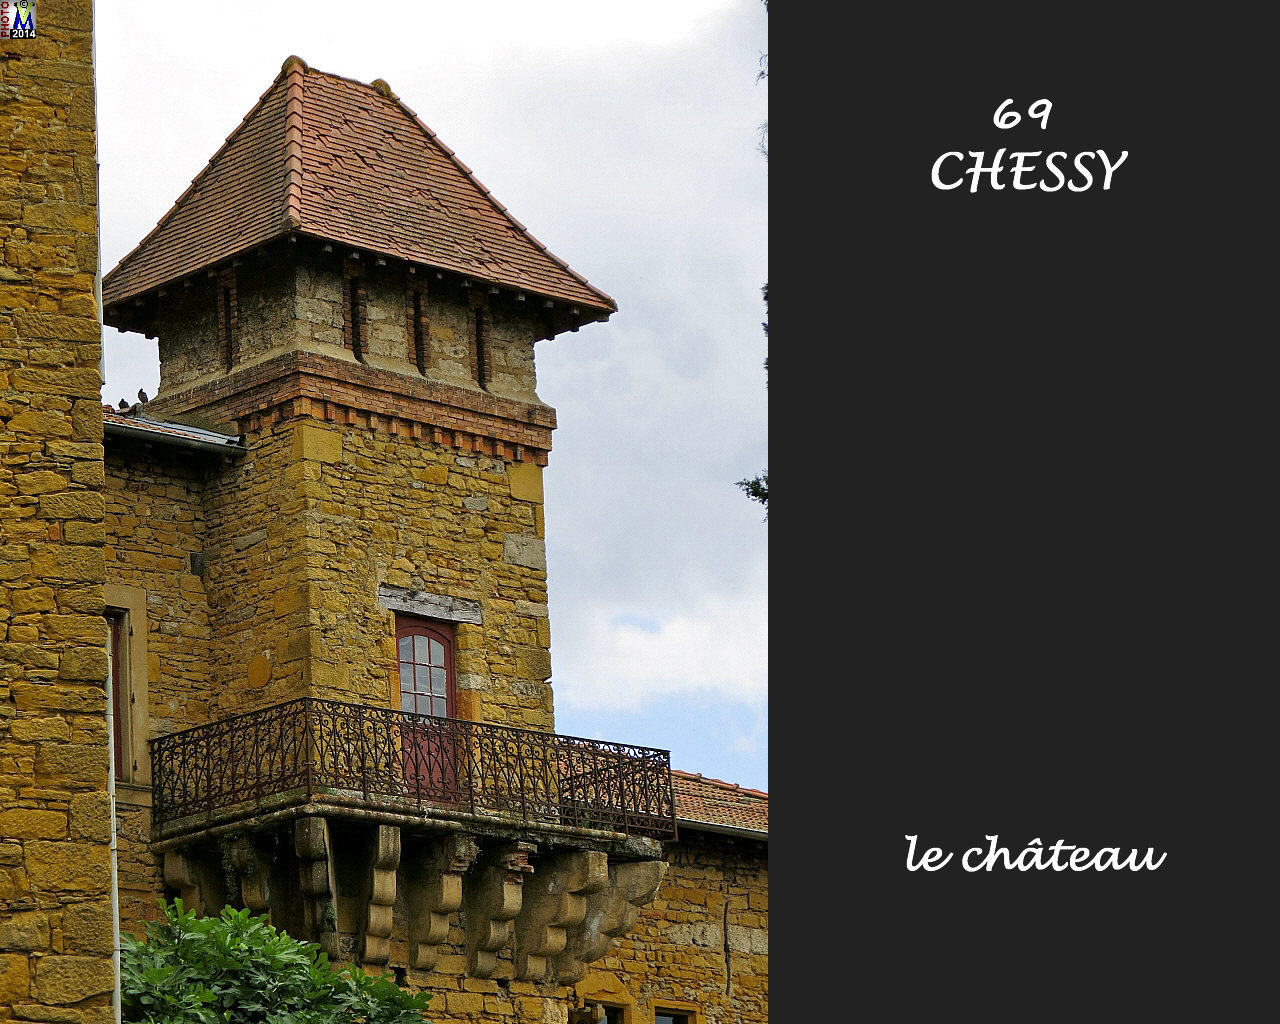 69CHESSY_chateau_112.jpg